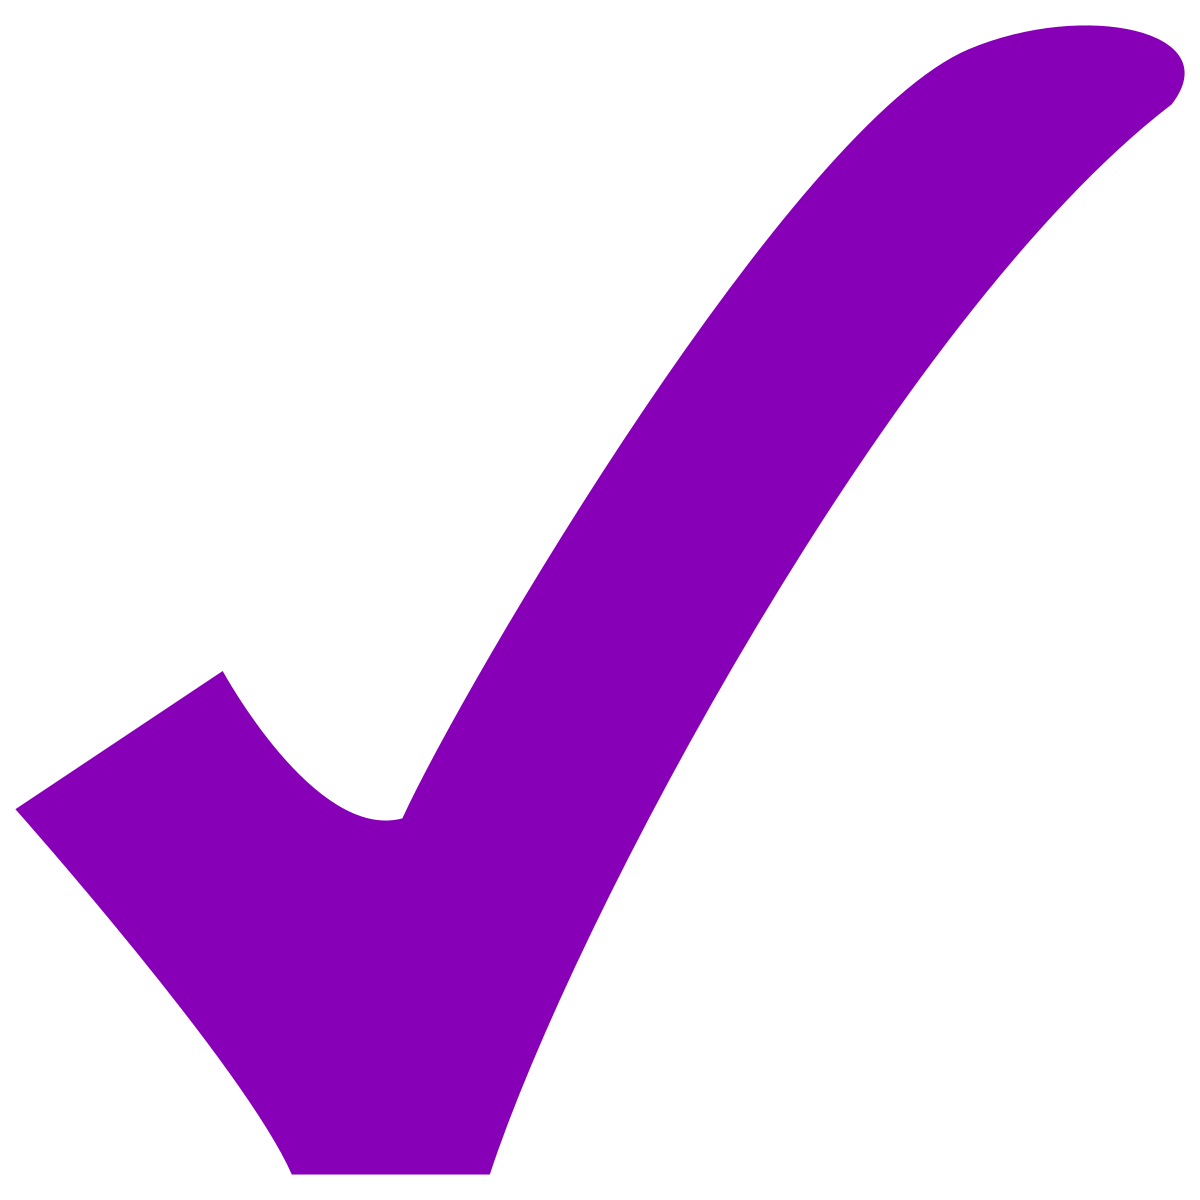 File:Wikivoyage-Logo-BHS-TEST.svg - Wikimedia Commons